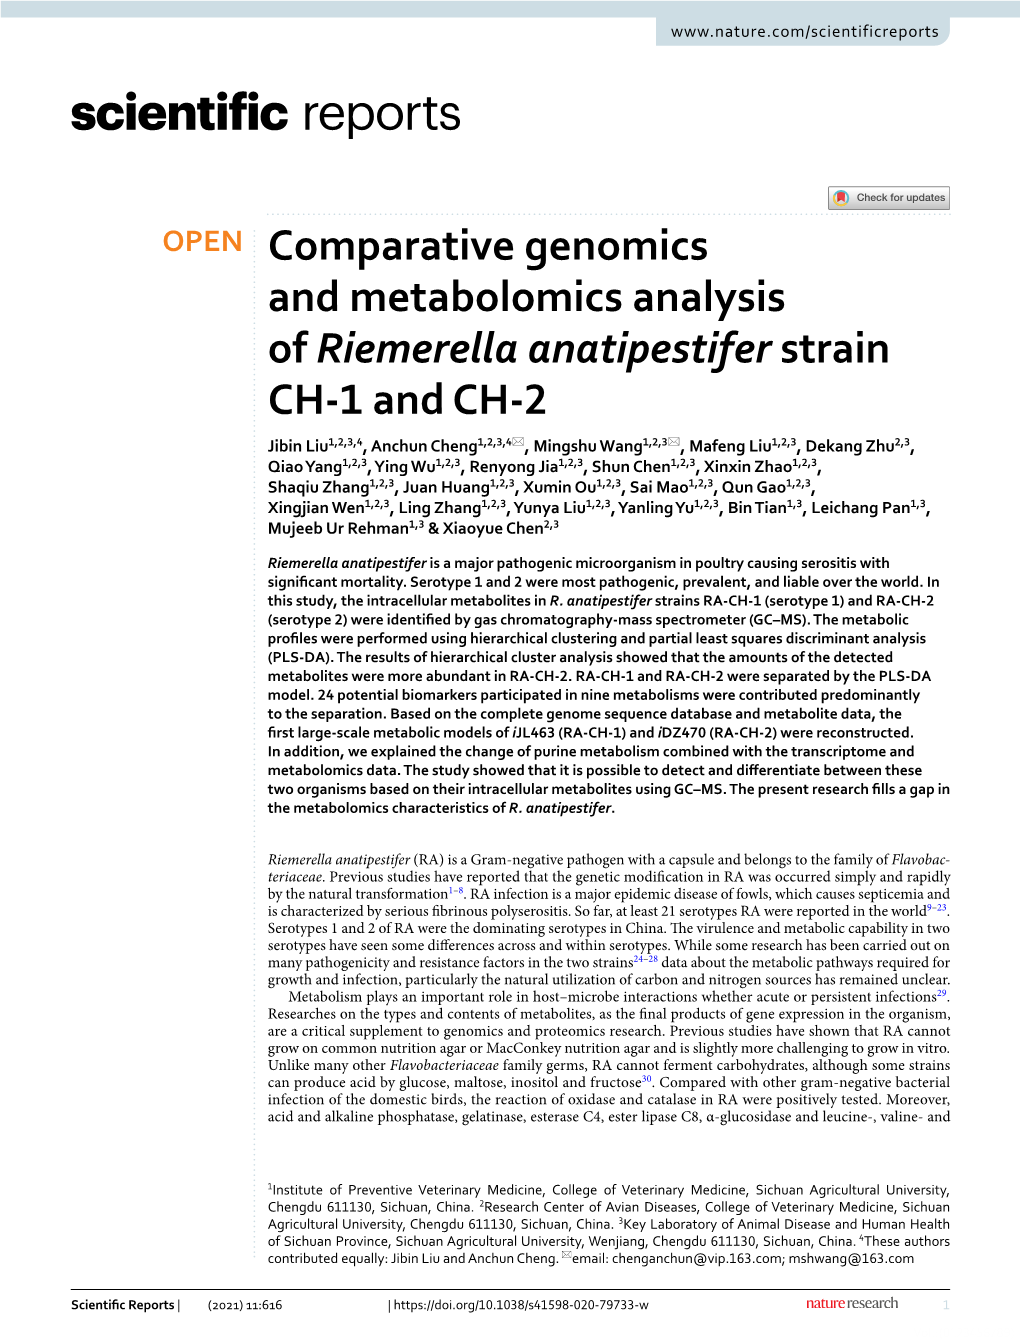 Comparative Genomics and Metabolomics Analysis Of